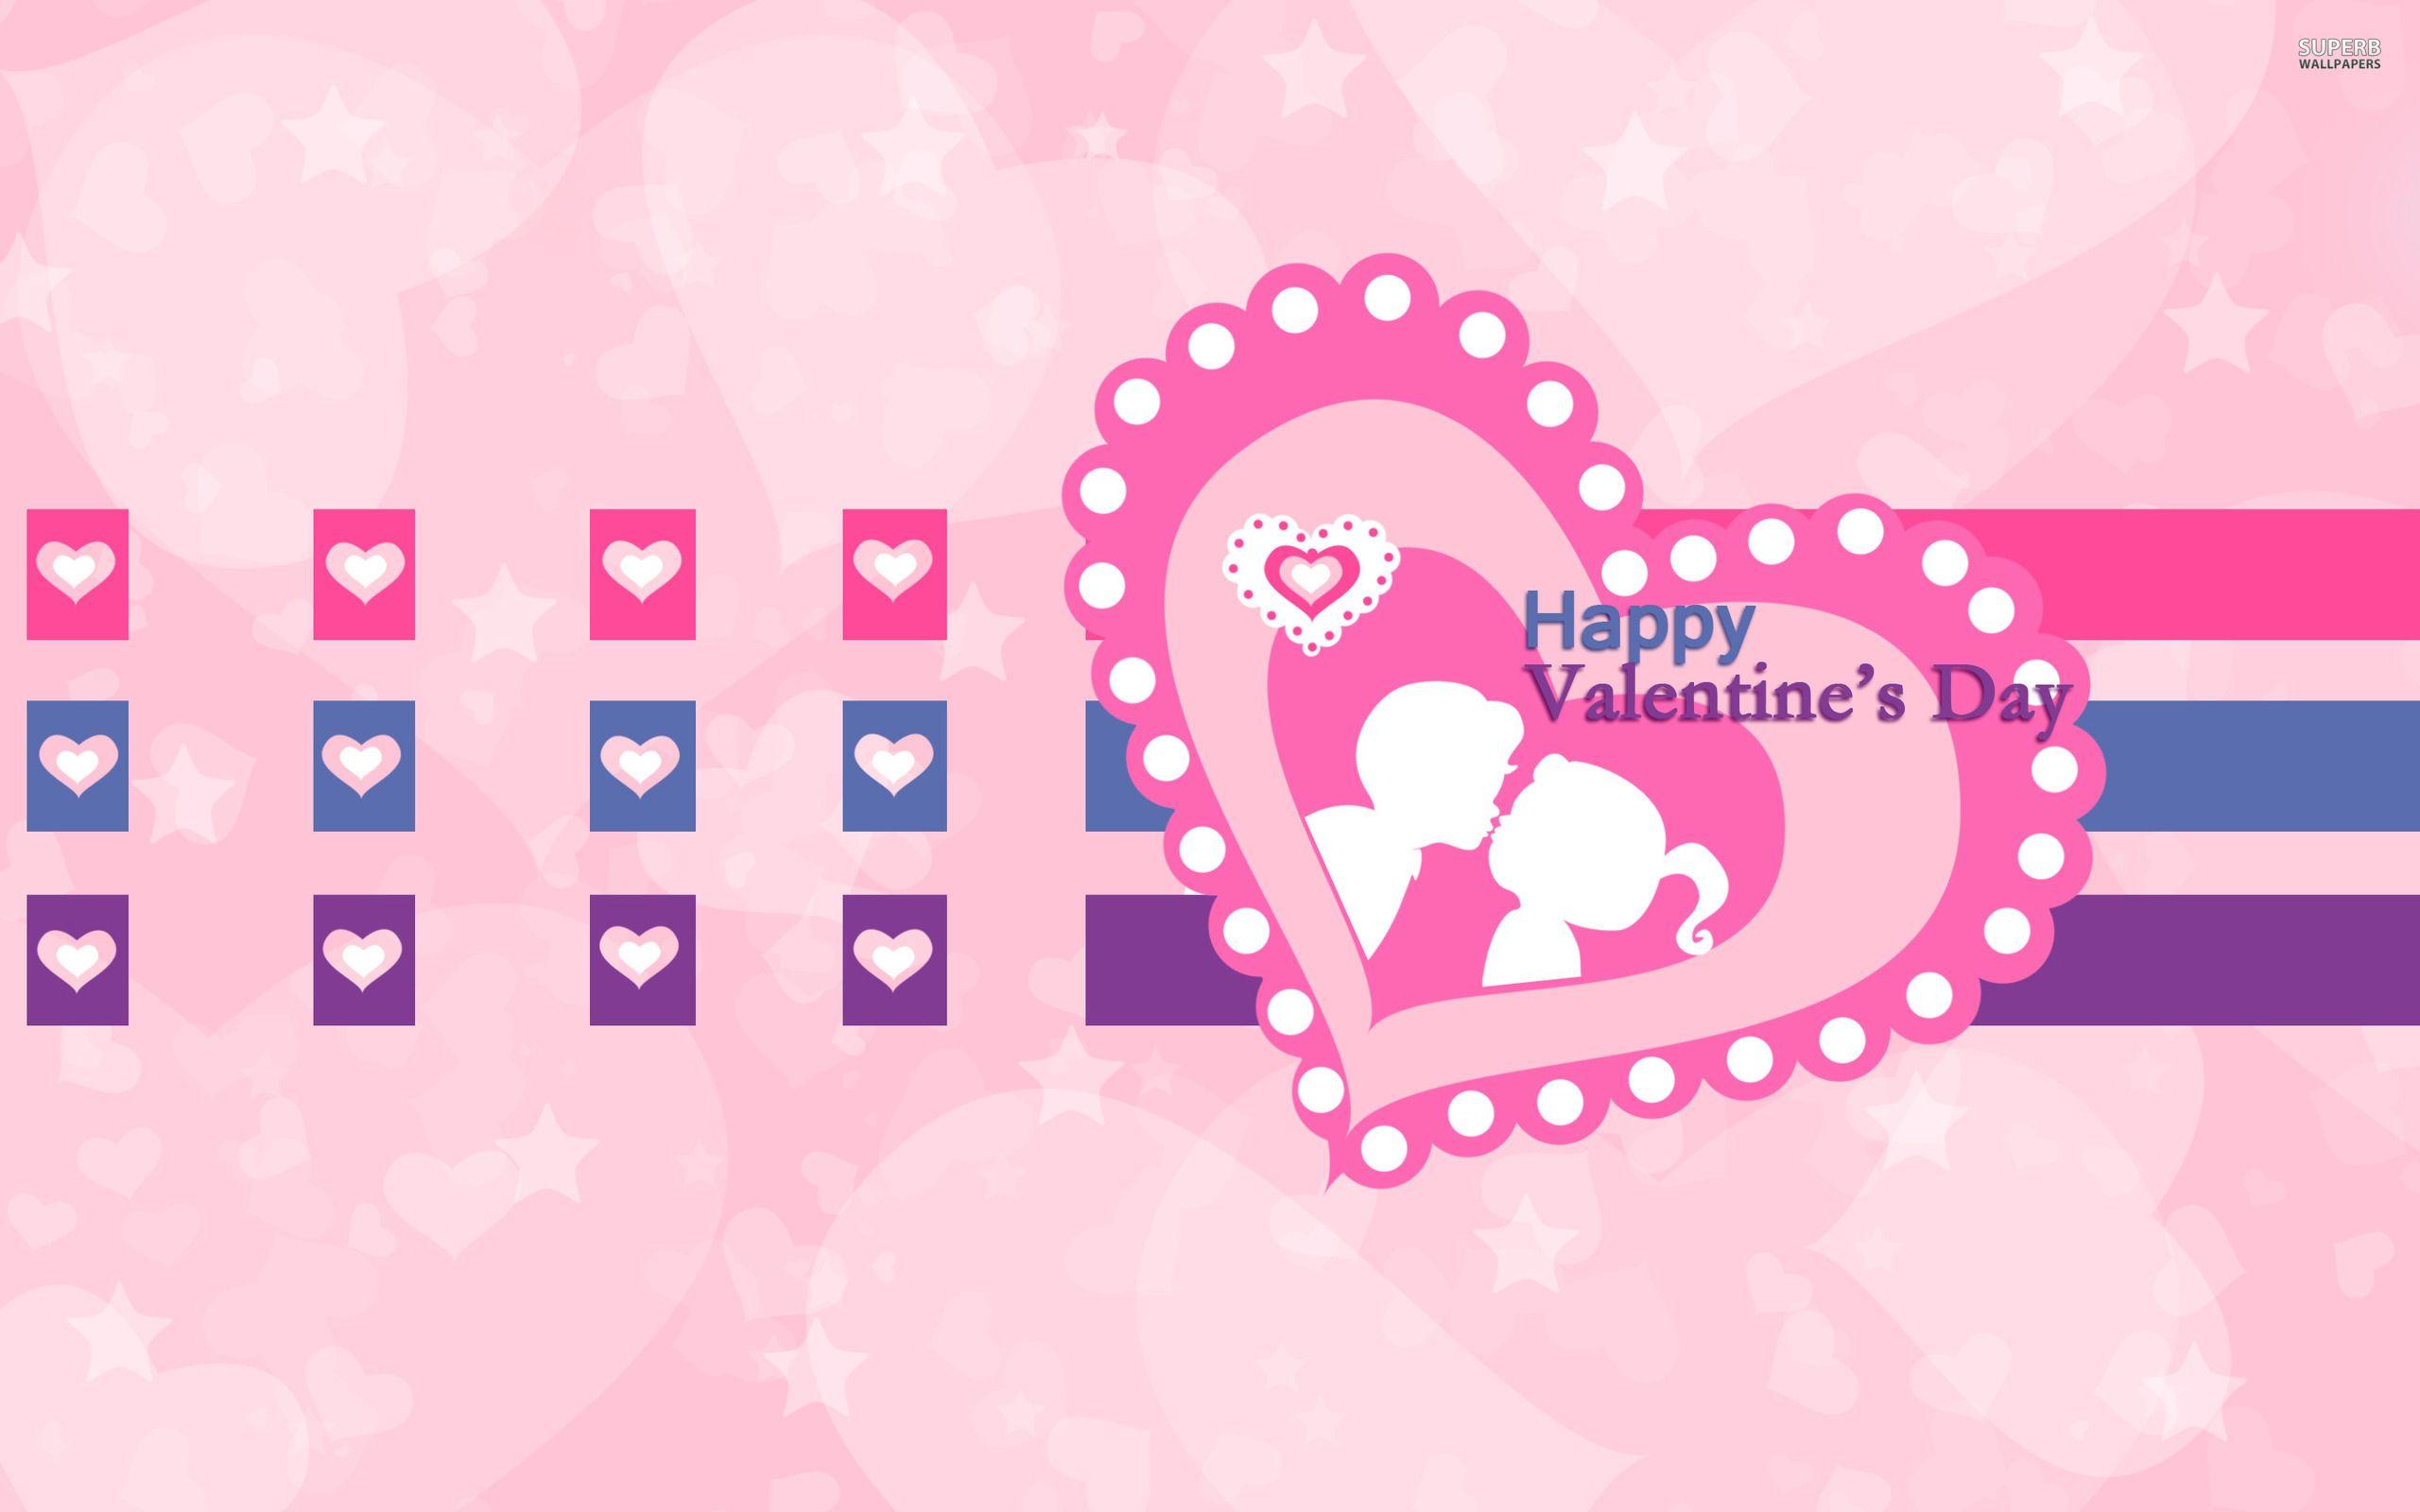 Wallpaper For > Cute Happy Valentine Day Wallpaper